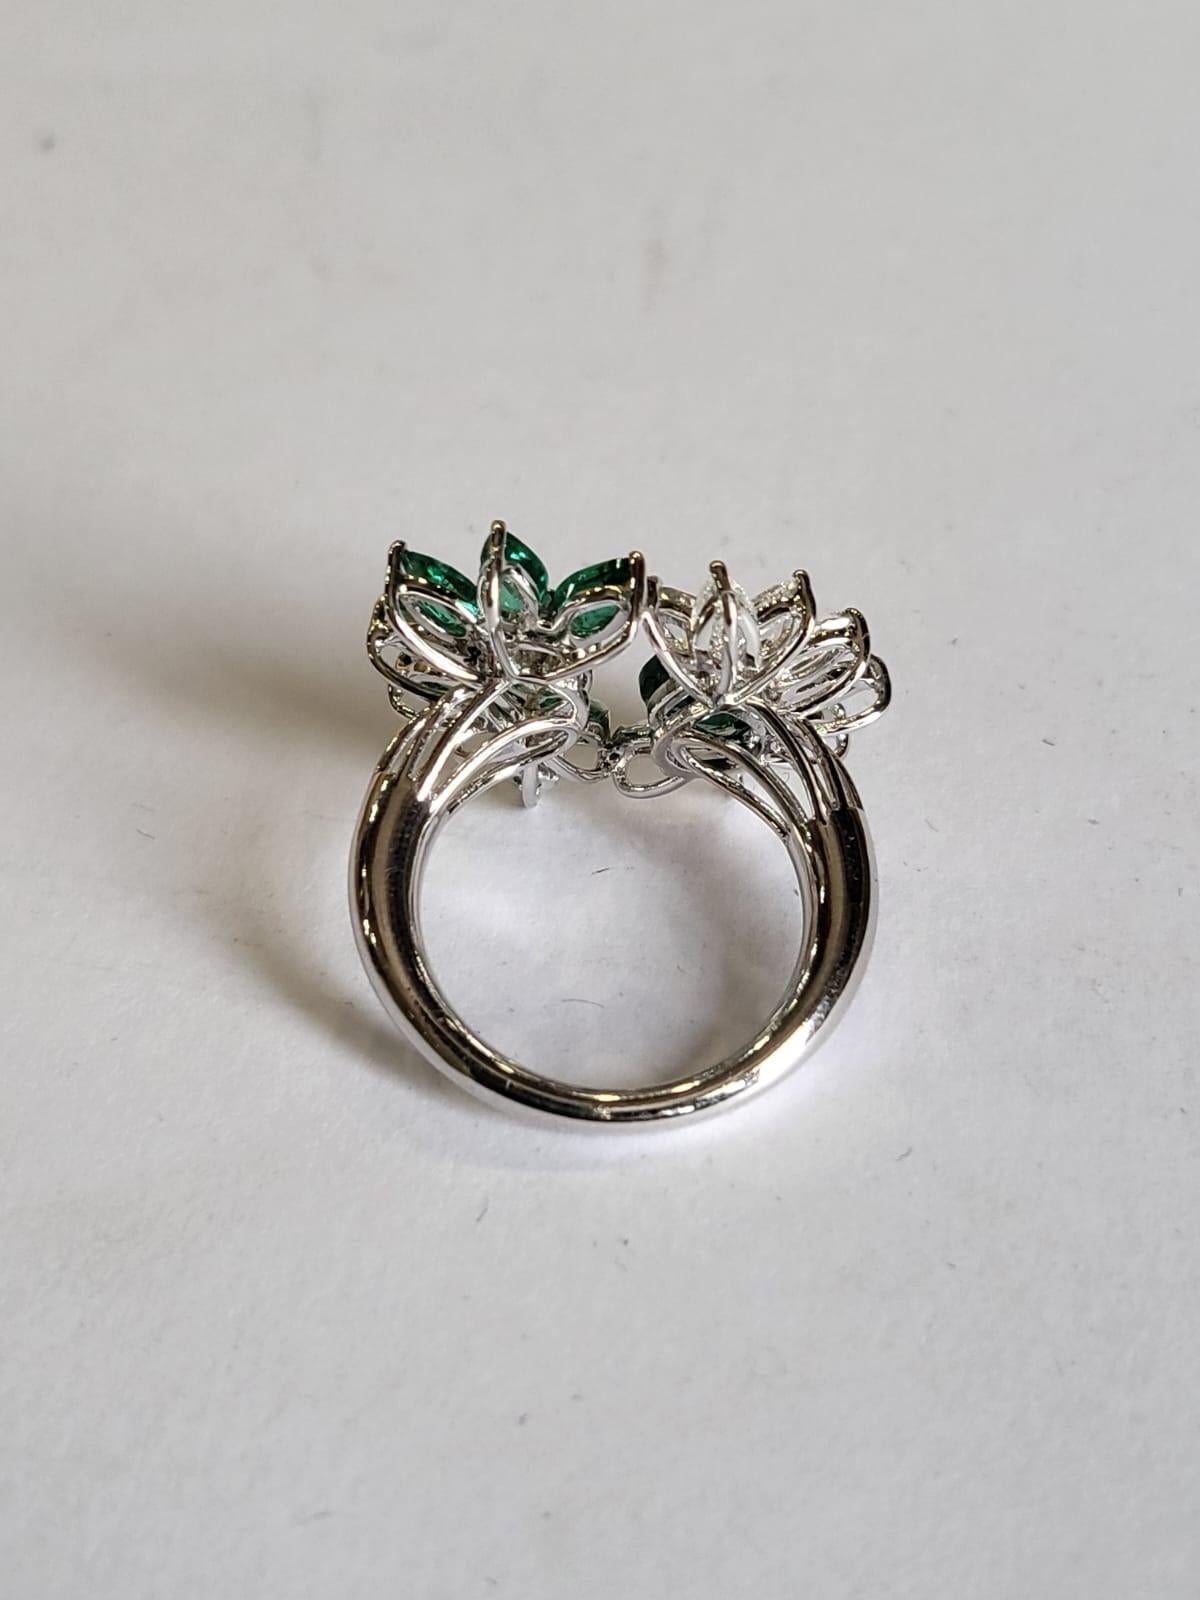 Modern Set in 18K Gold, 2.92 carat Zambian Emerald & 2.02 carat Diamonds Engagement Ring